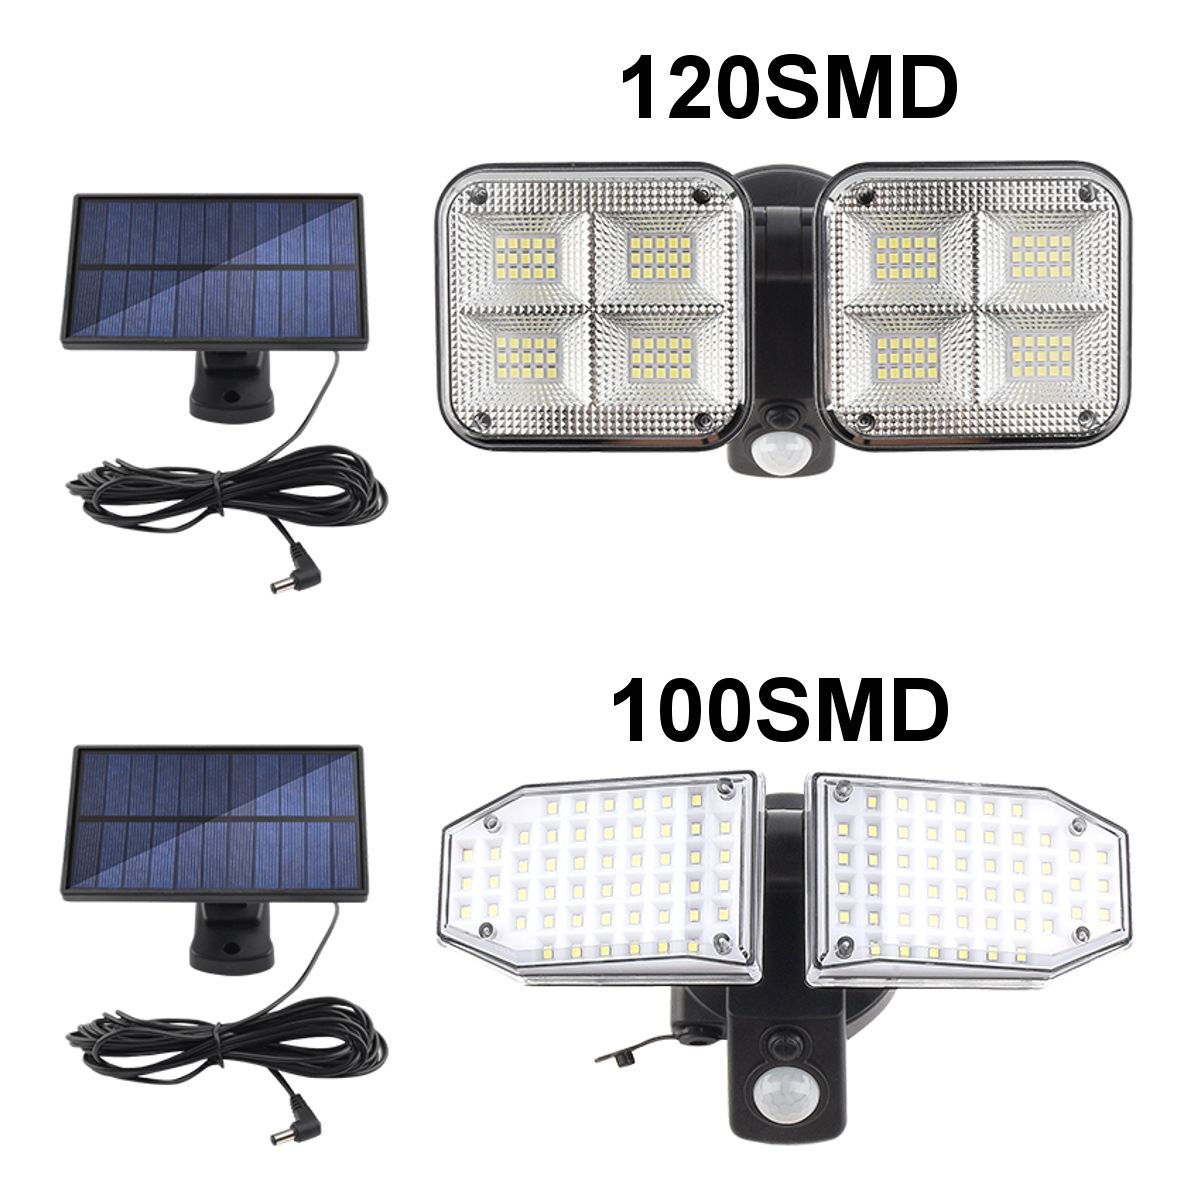 100120SMD-Solar-Motion-Sensor-Lights-Security-Wall-Lamp-Floodlight-1764002